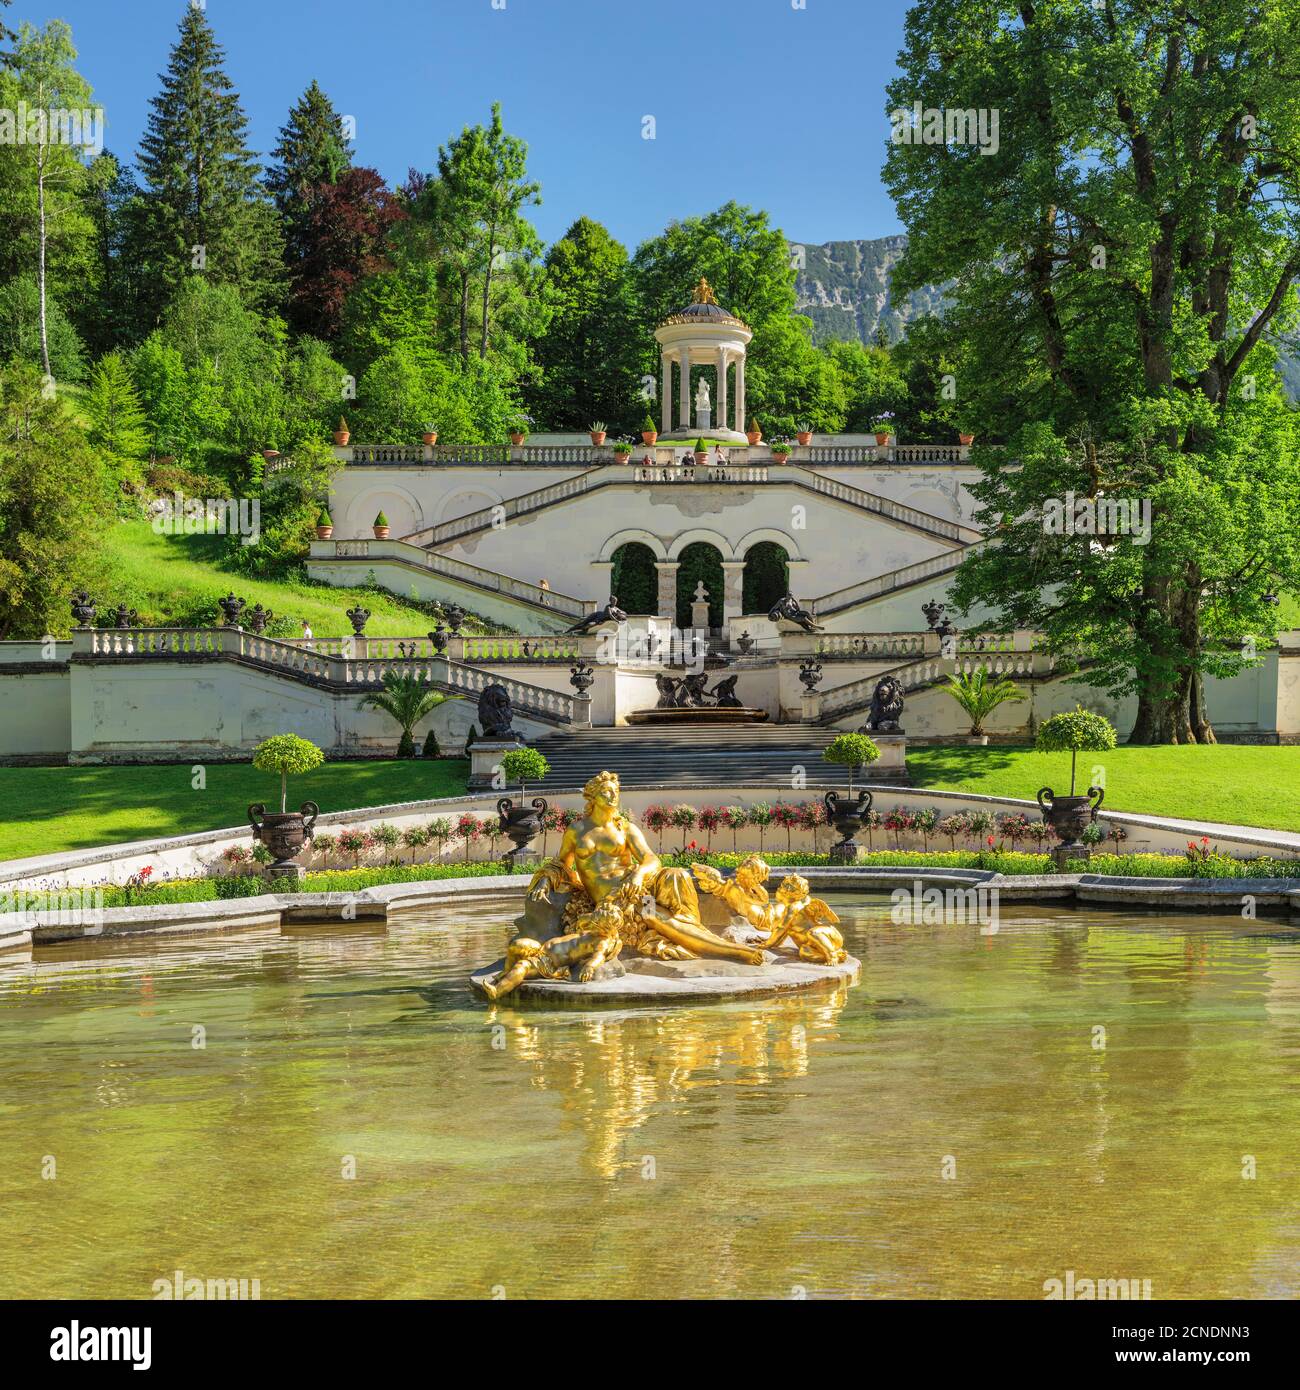 Parco acquatico con fontana Flora, vista sul Tempio di Venere, Palazzo Linderhof, Werdenfelser Land, Alpi Bavaresi, alta Baviera, Germania, Europa Foto Stock